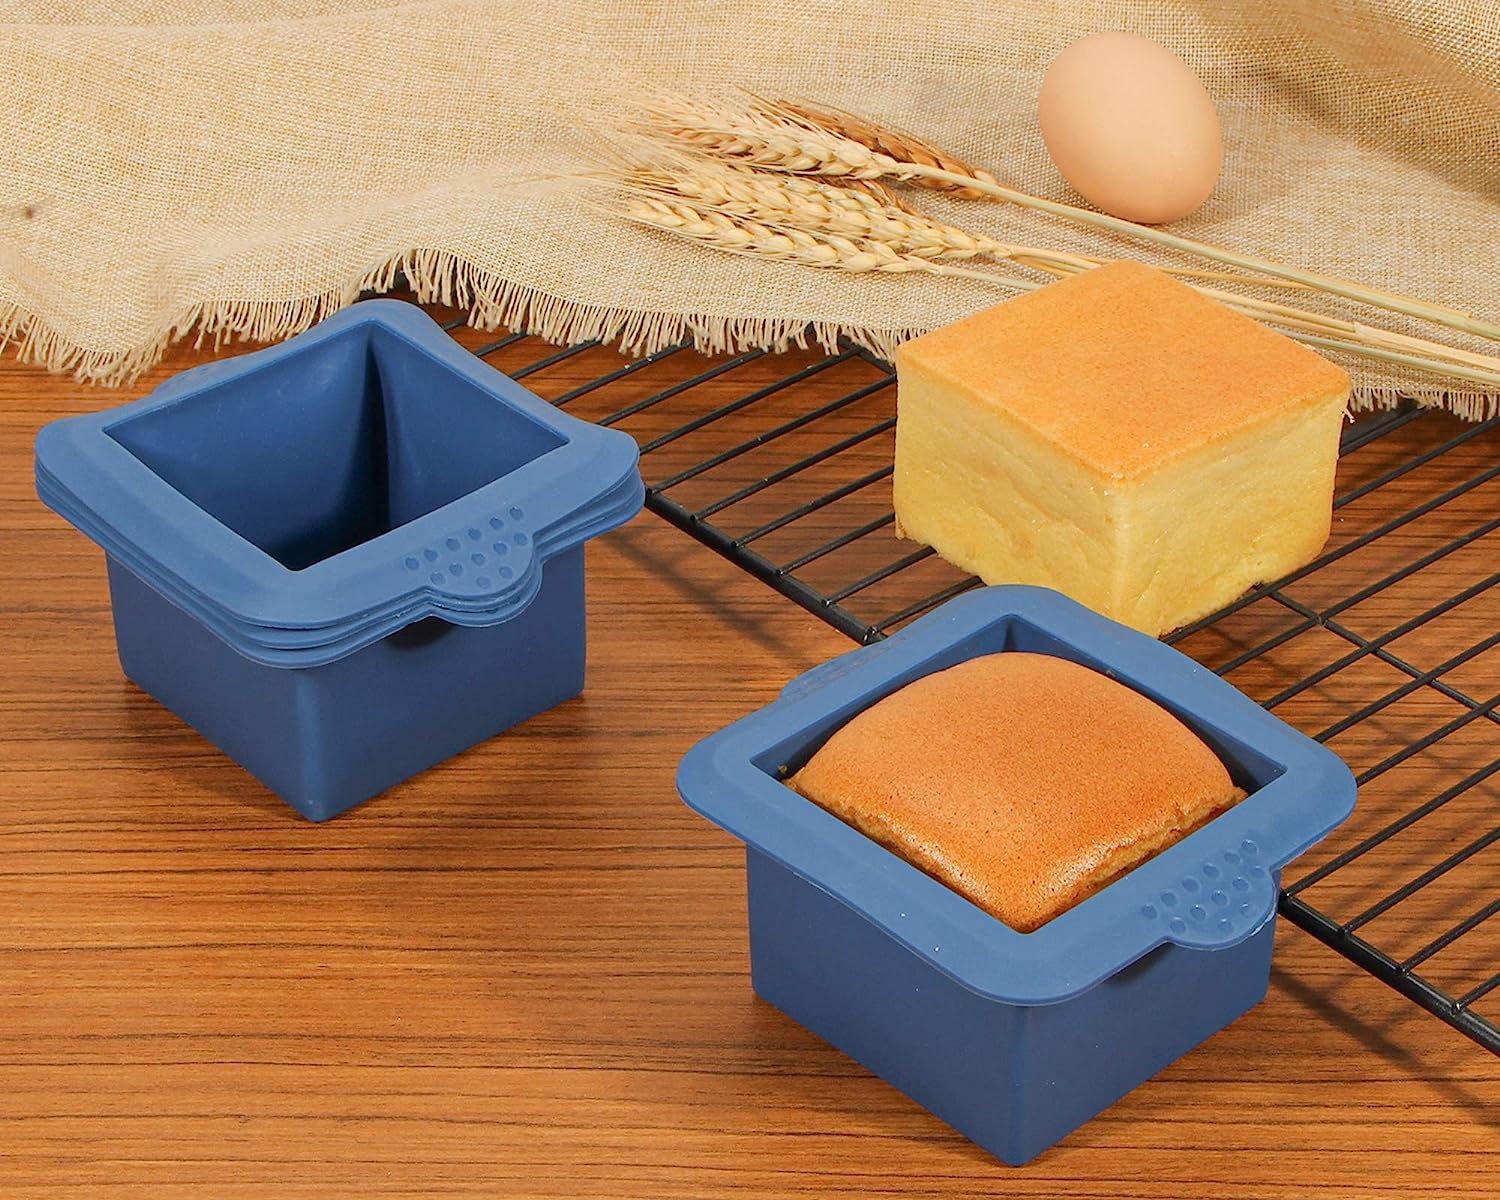 Webake Silicone Square Mini Cake Mold 3x3 Inch for Individual Portion